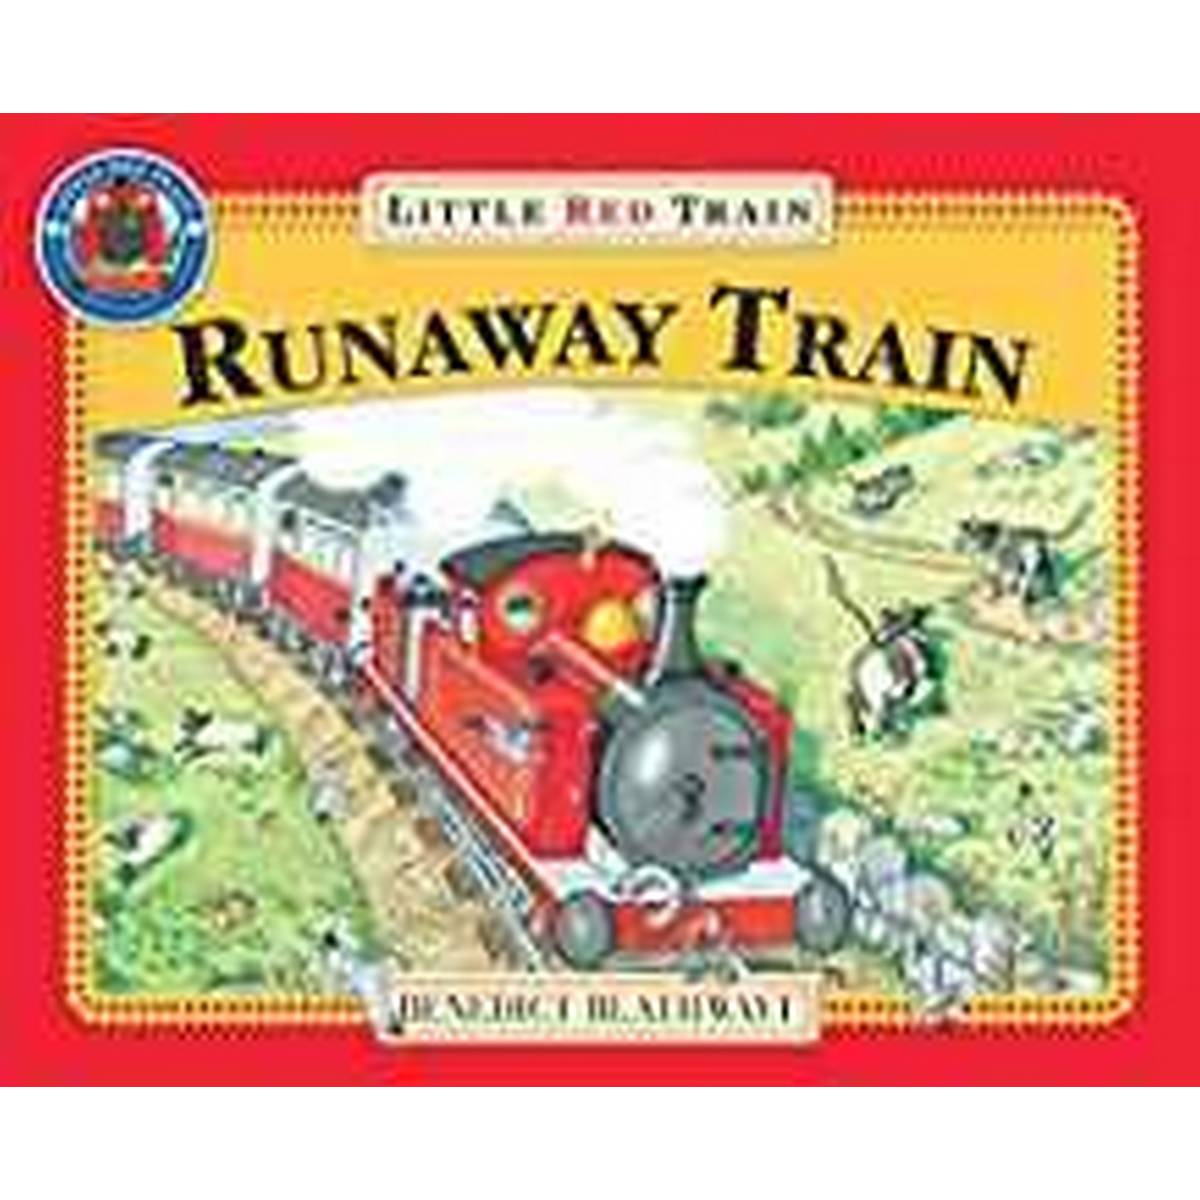 Little Red Train The Runaway Train